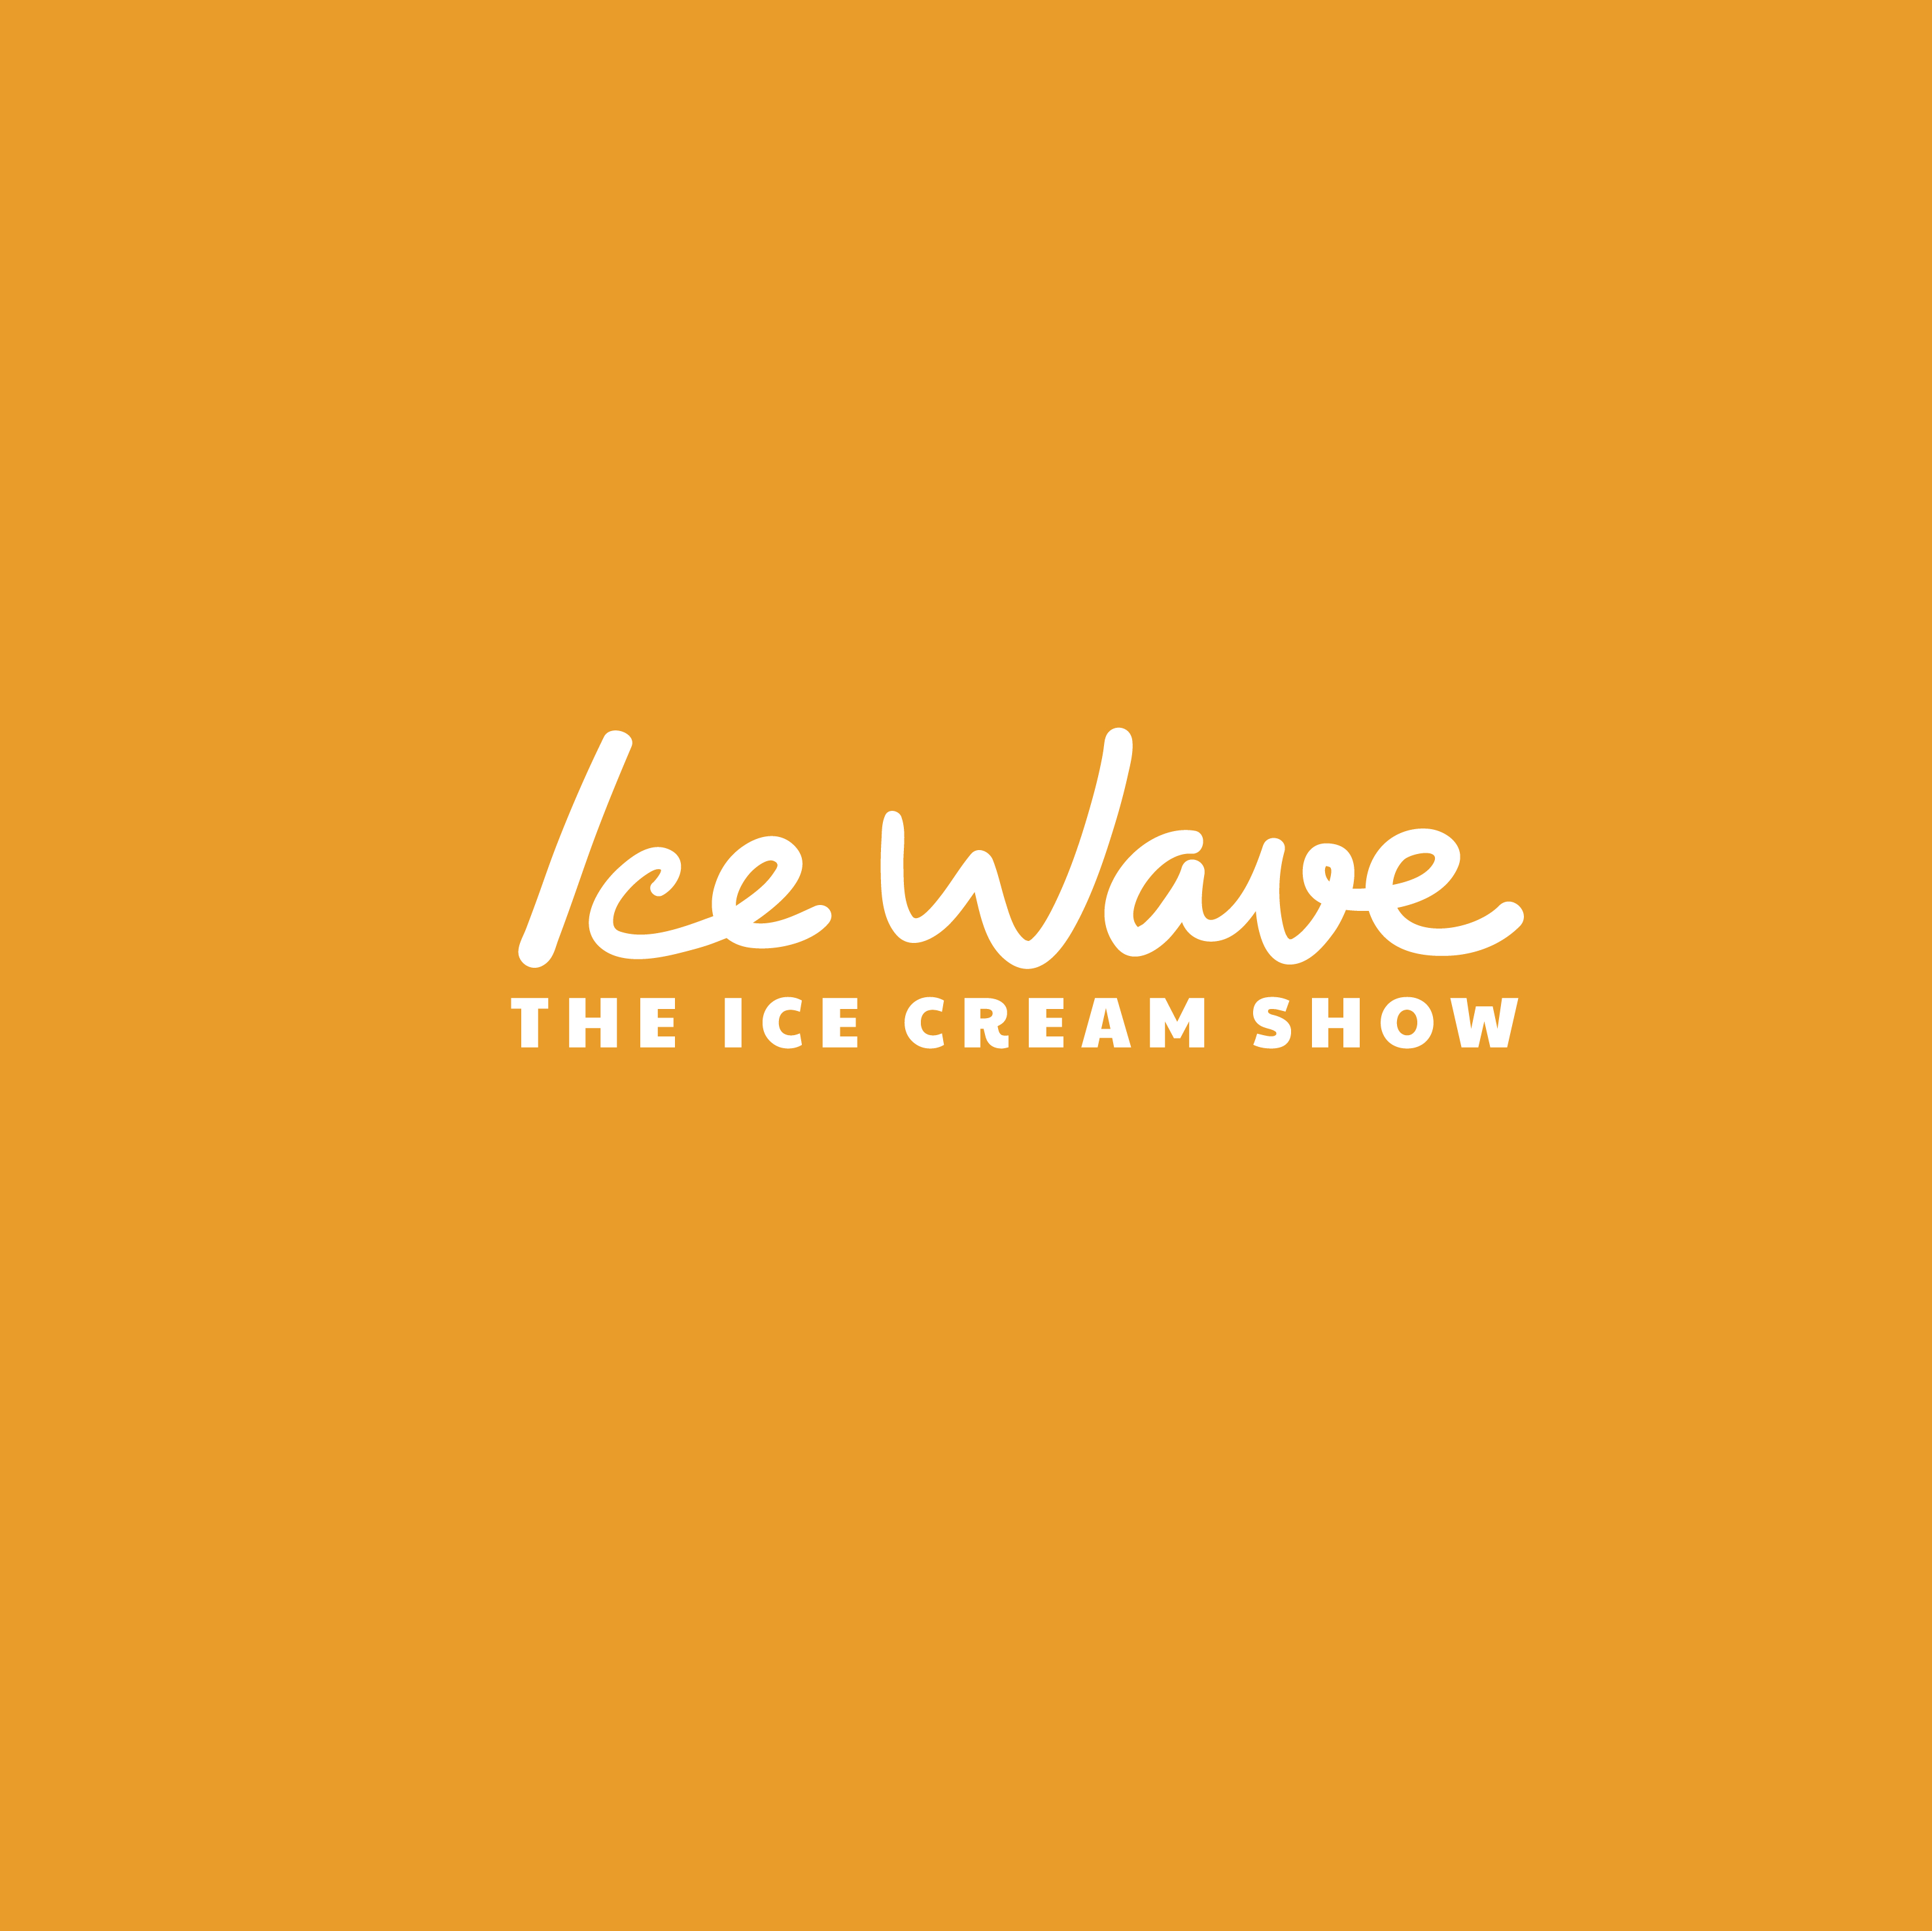 ICE WAVE NUEVO LOGO.jpg